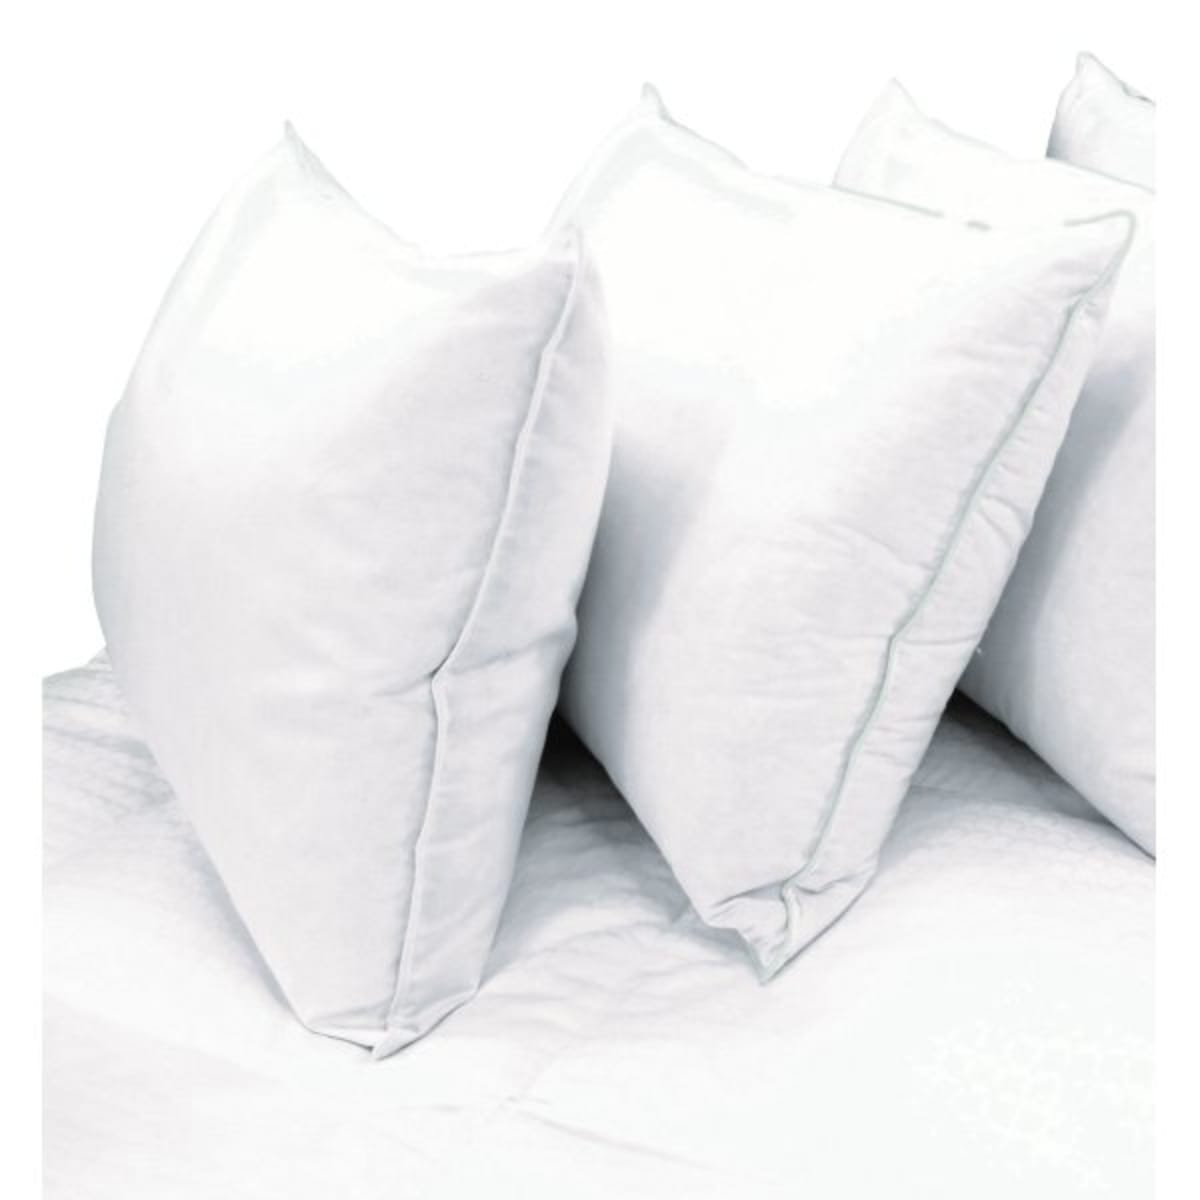 mühldorfer premium down special pillow